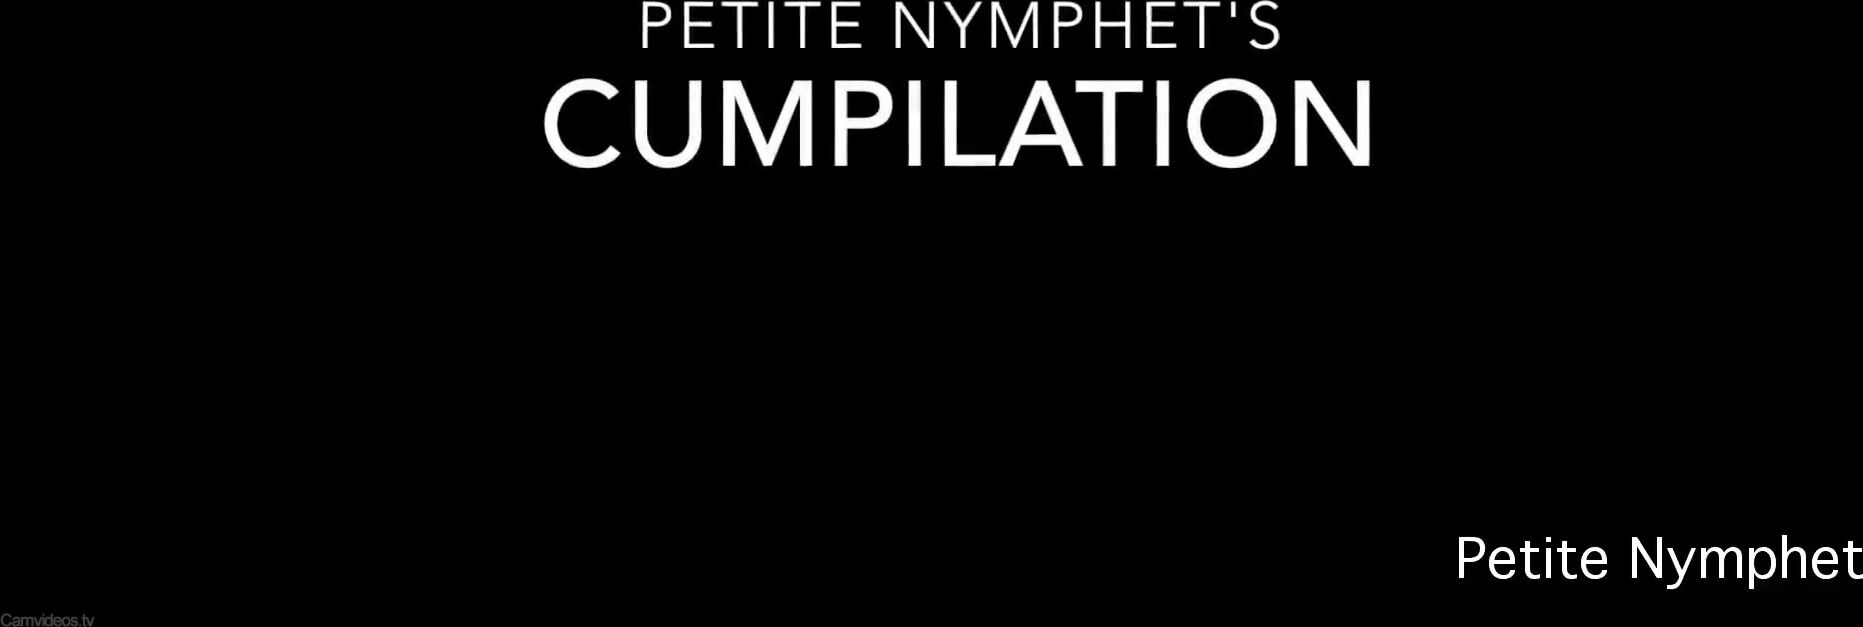 Petite Nymphet - Cumpilation